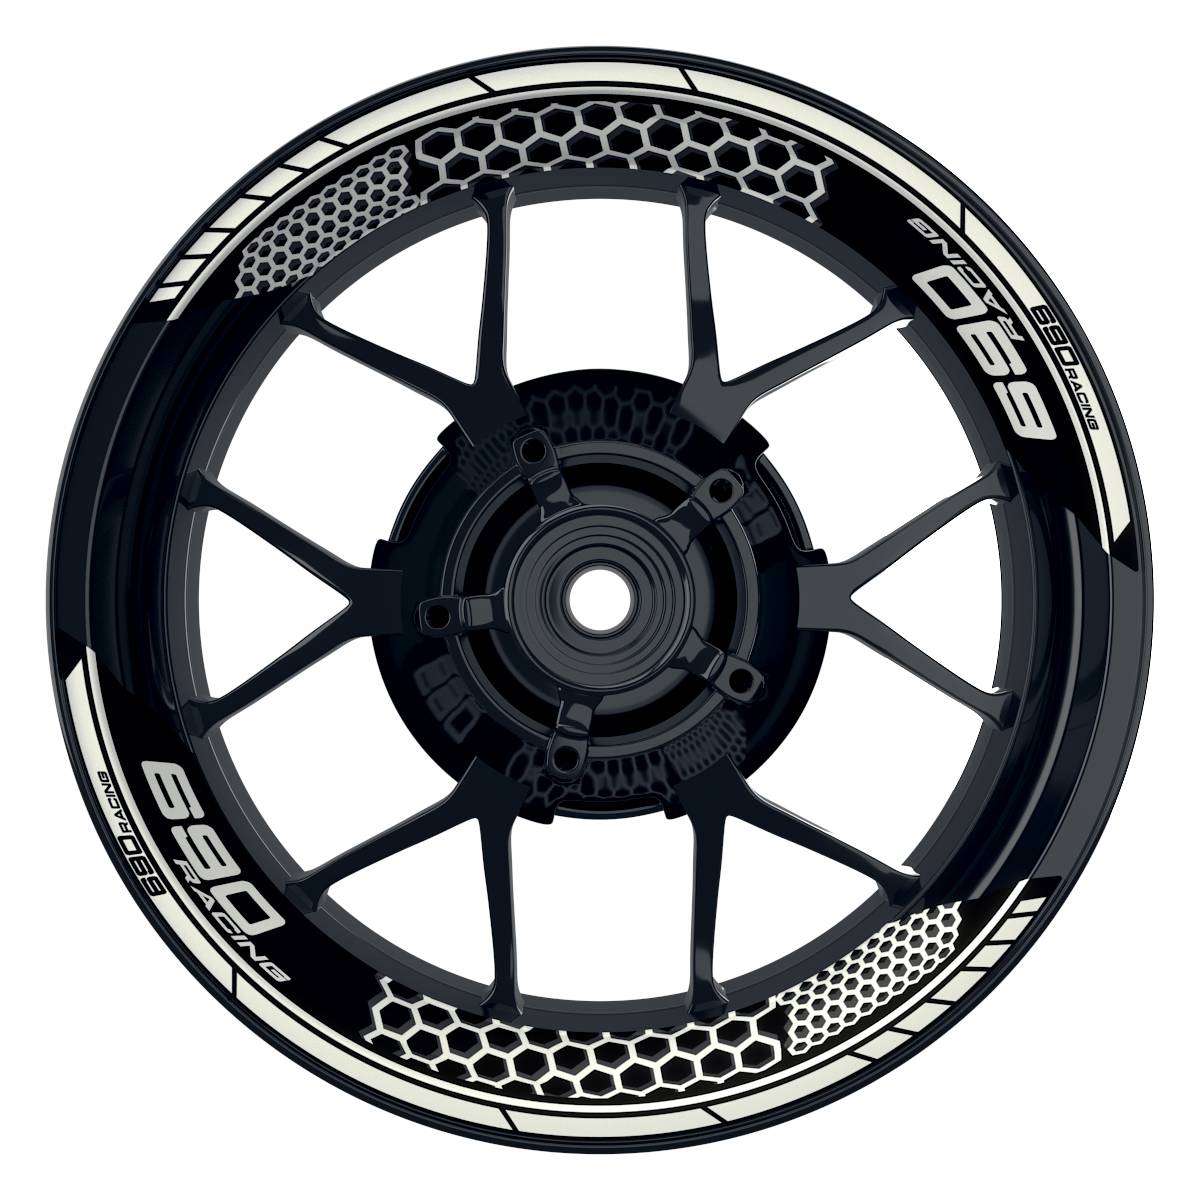 KTM Racing 690 Hexagon schwarz weiss Frontansicht